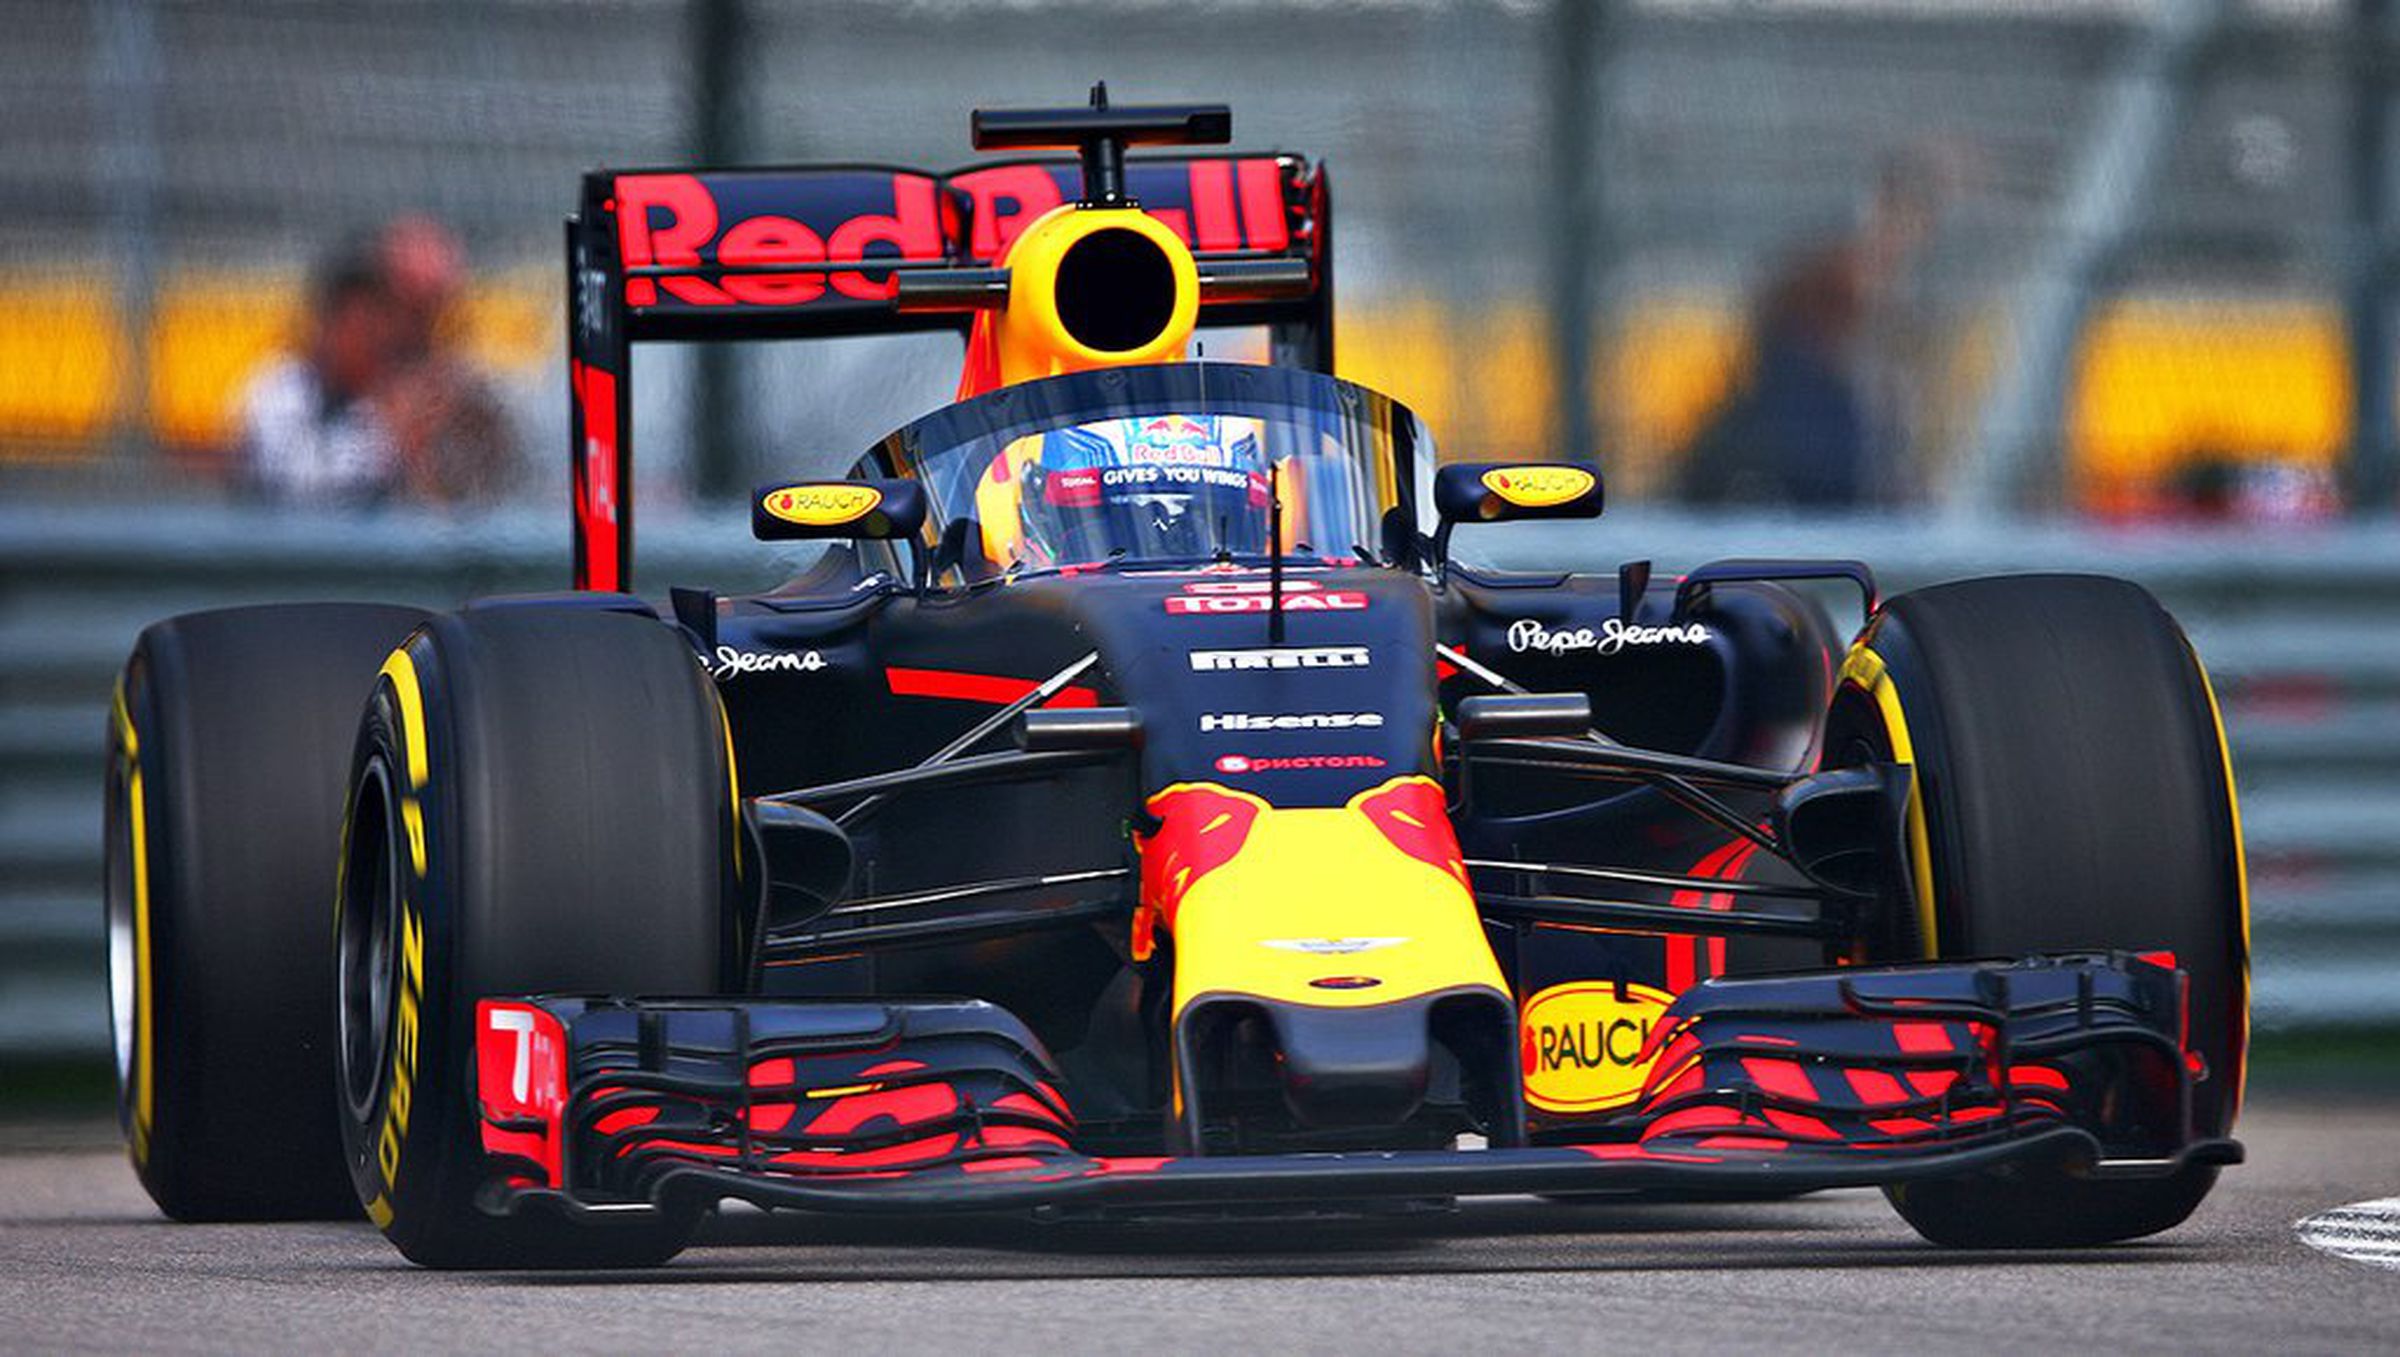 Red Bull racing's aeroscreen in photos